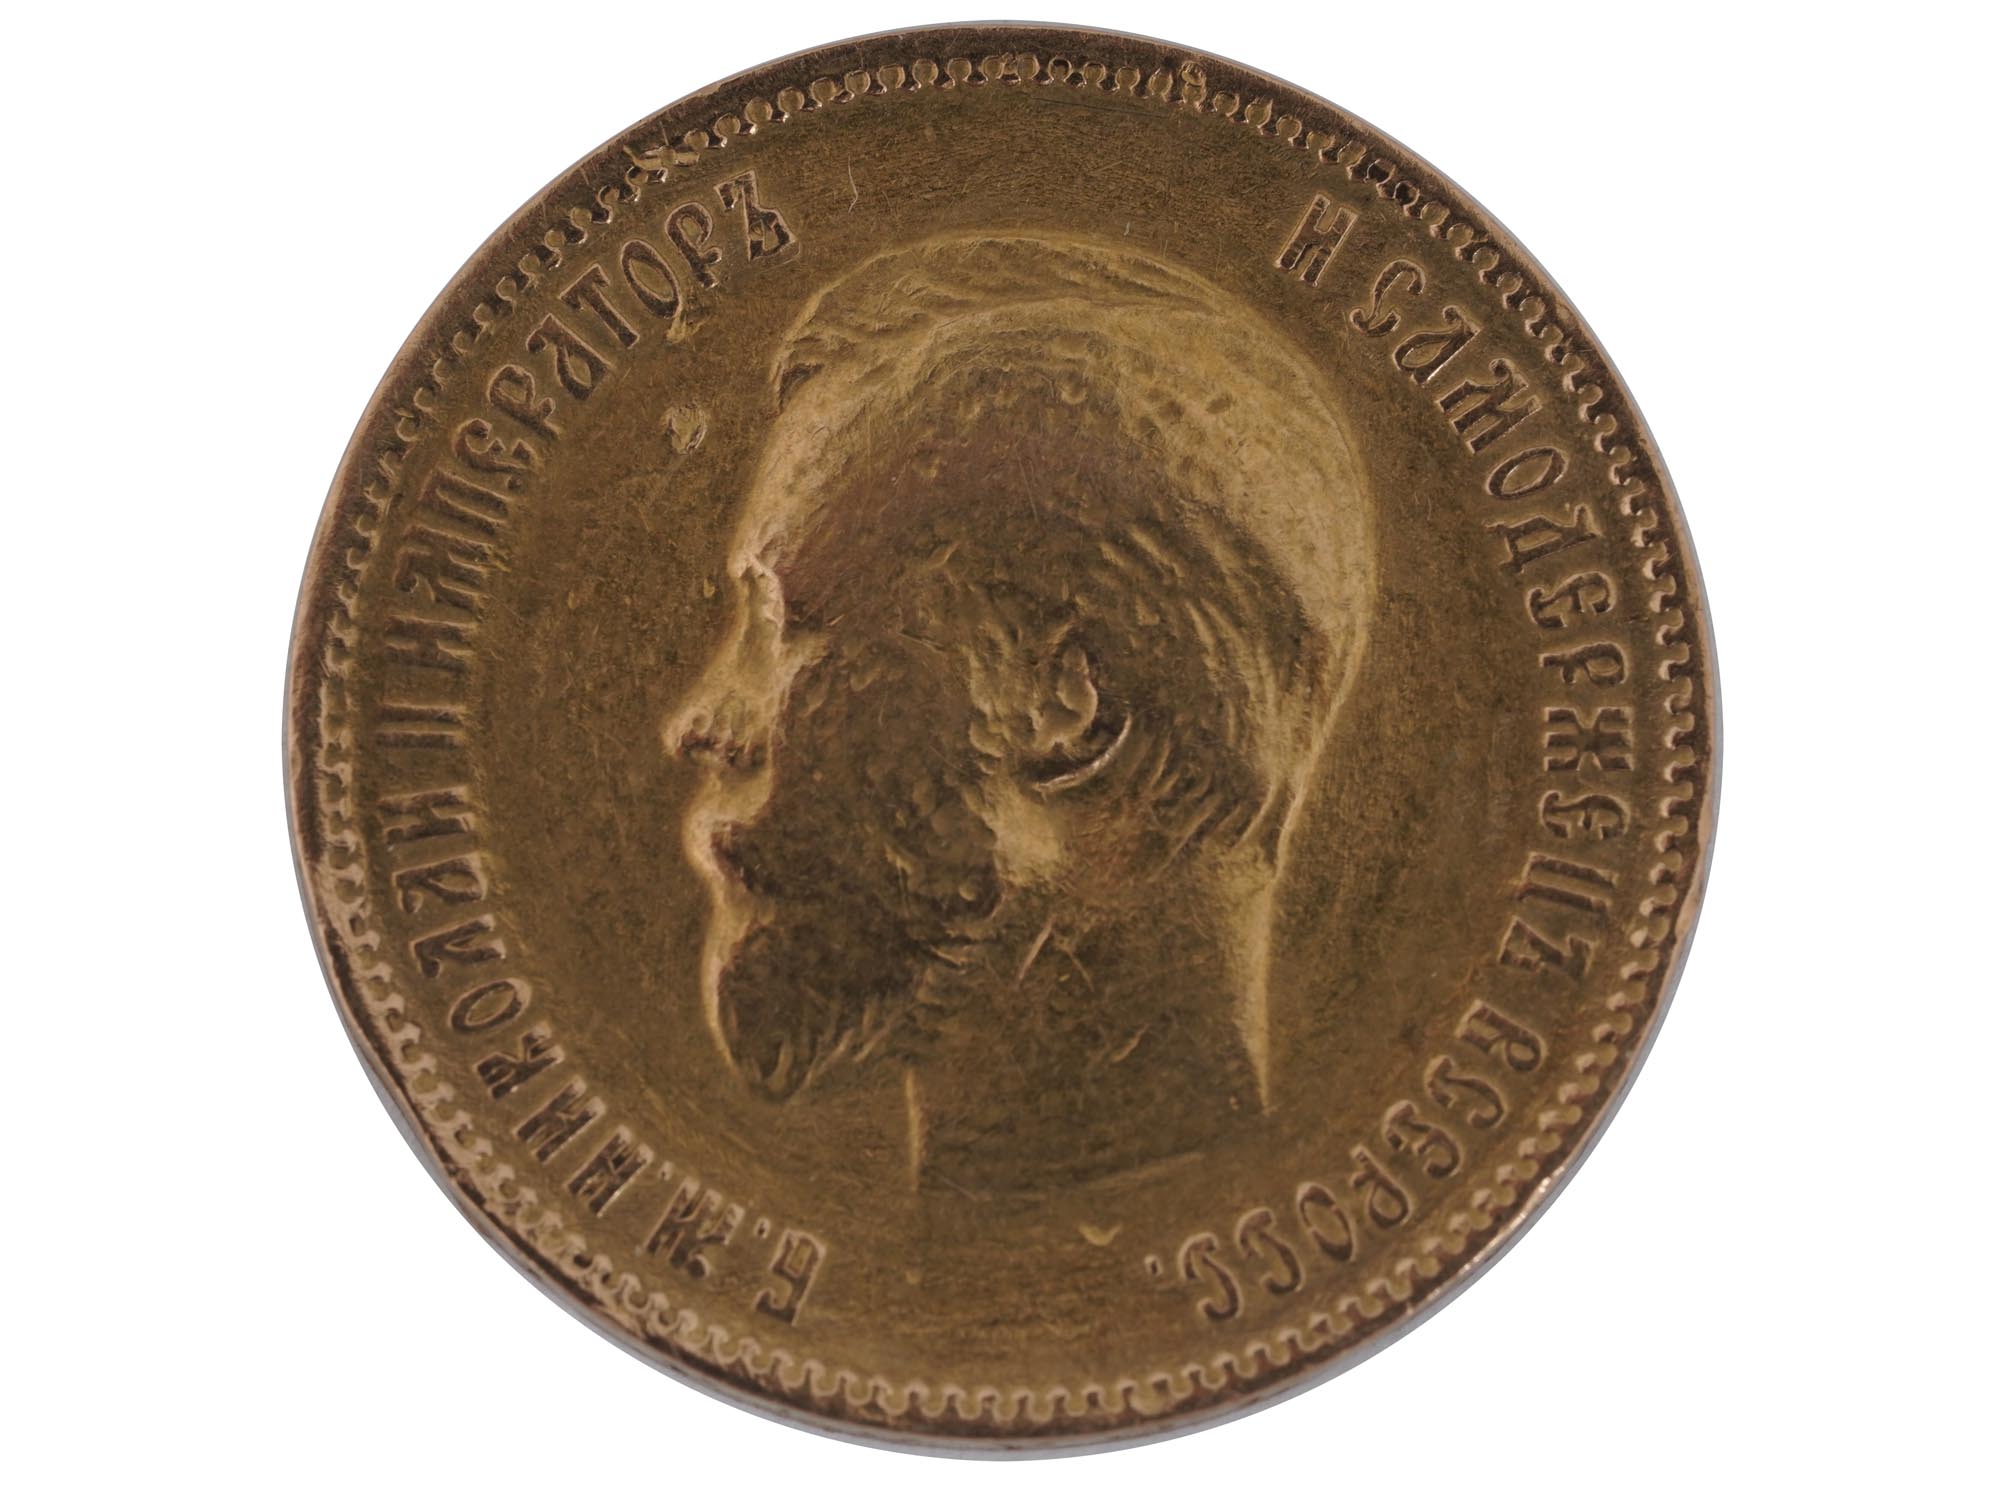 ANTIQUE RUSSIAN NICHOLAS II GOLD 10 RUBLES COIN PIC-0